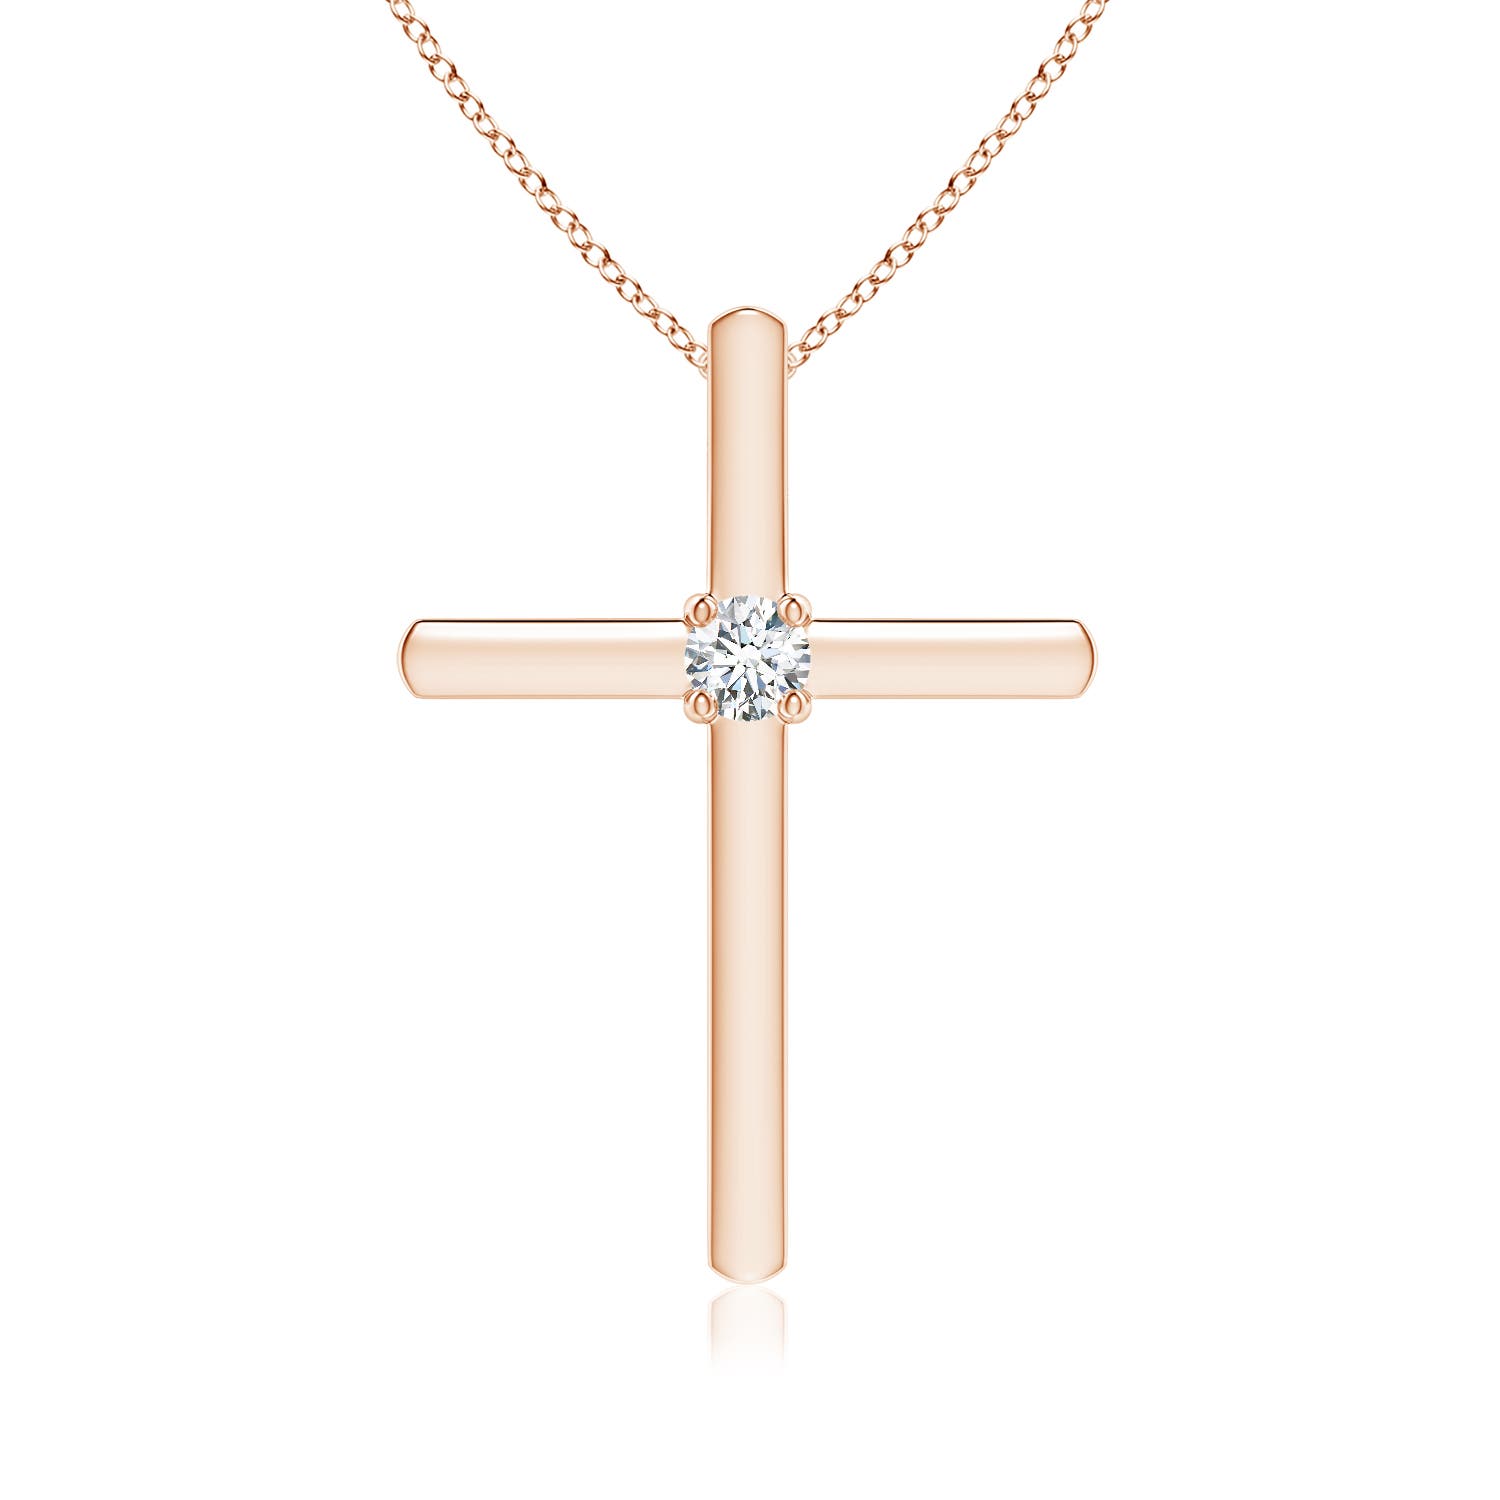 Shop Diamond Pendant Necklaces for Women | Angara